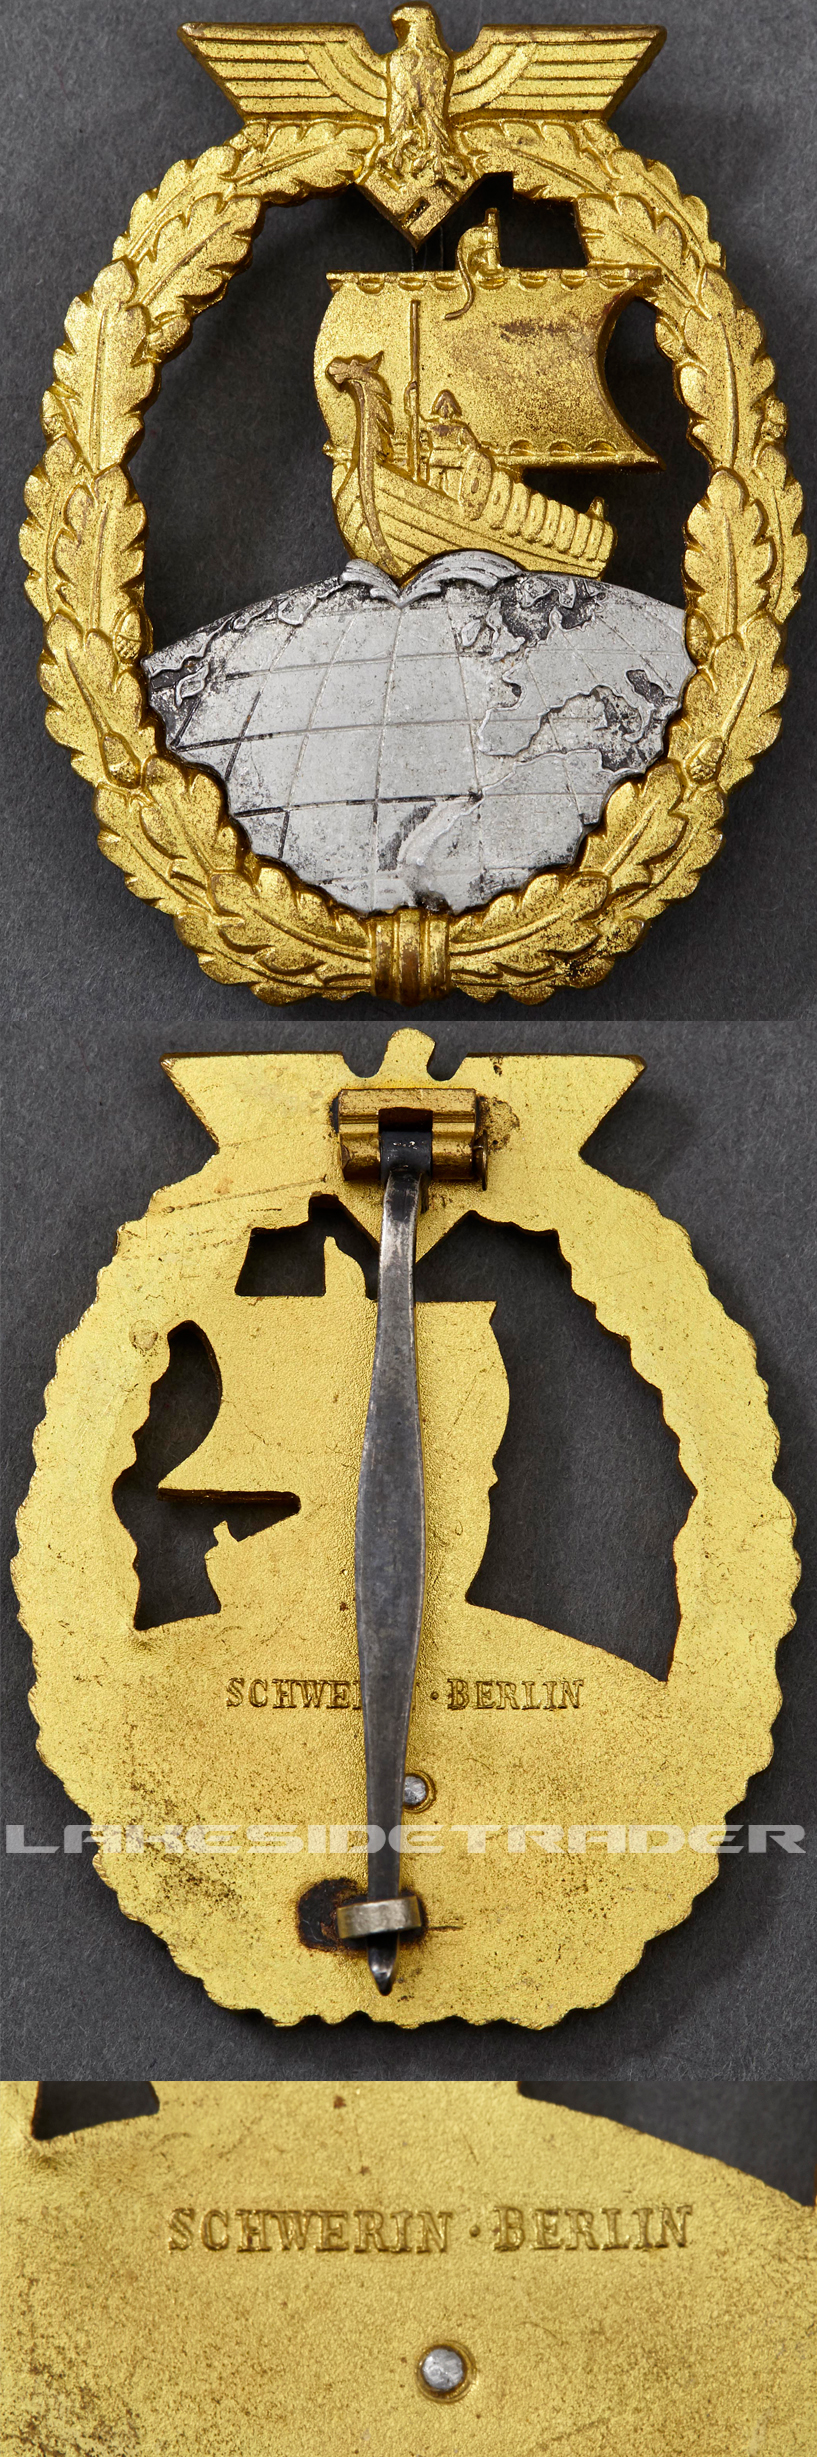 Auxiliary Cruiser War Badge by Schwerin